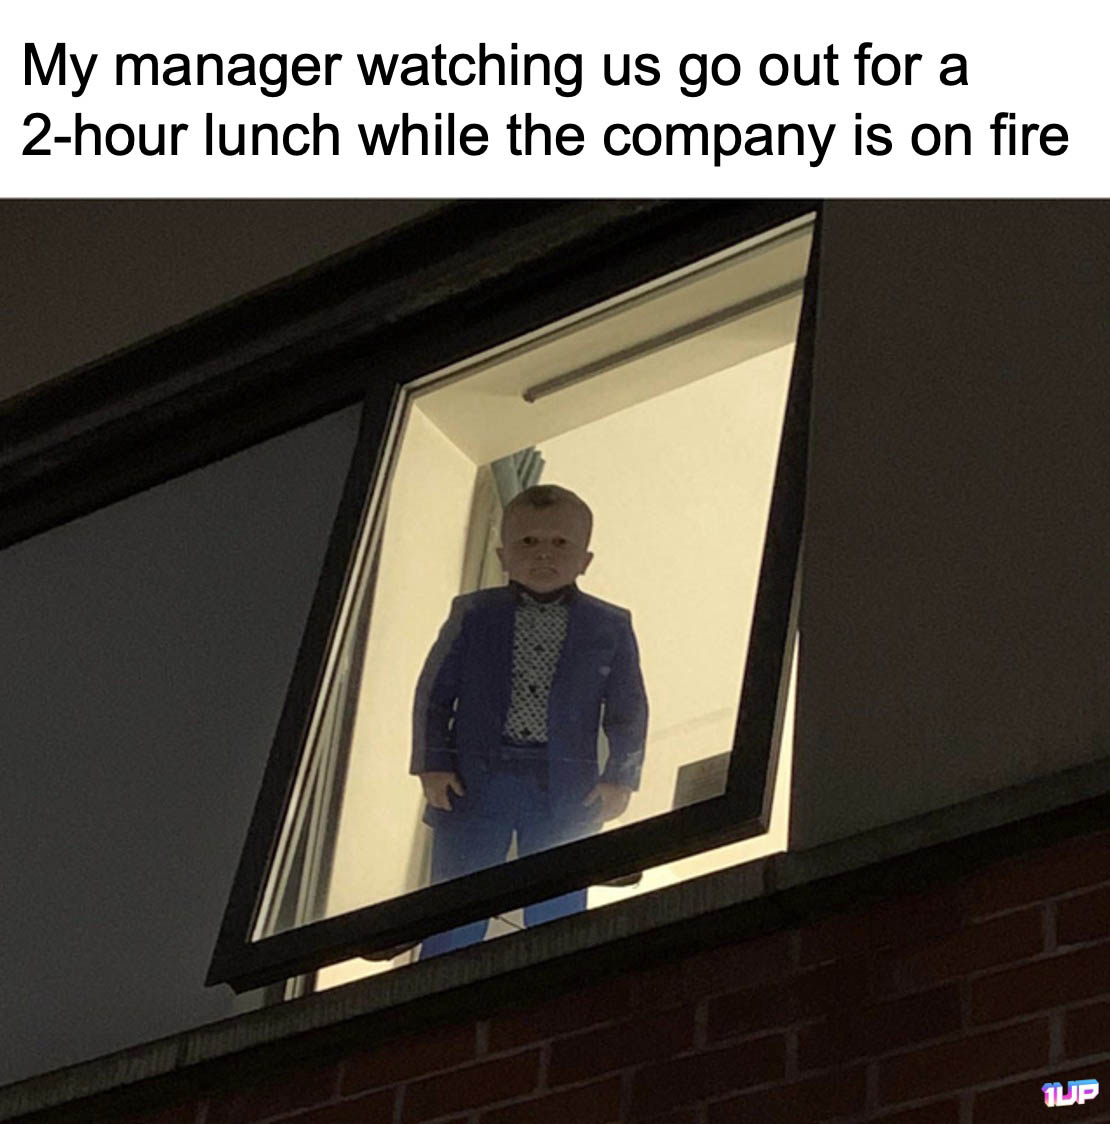 Sales Manager Meme